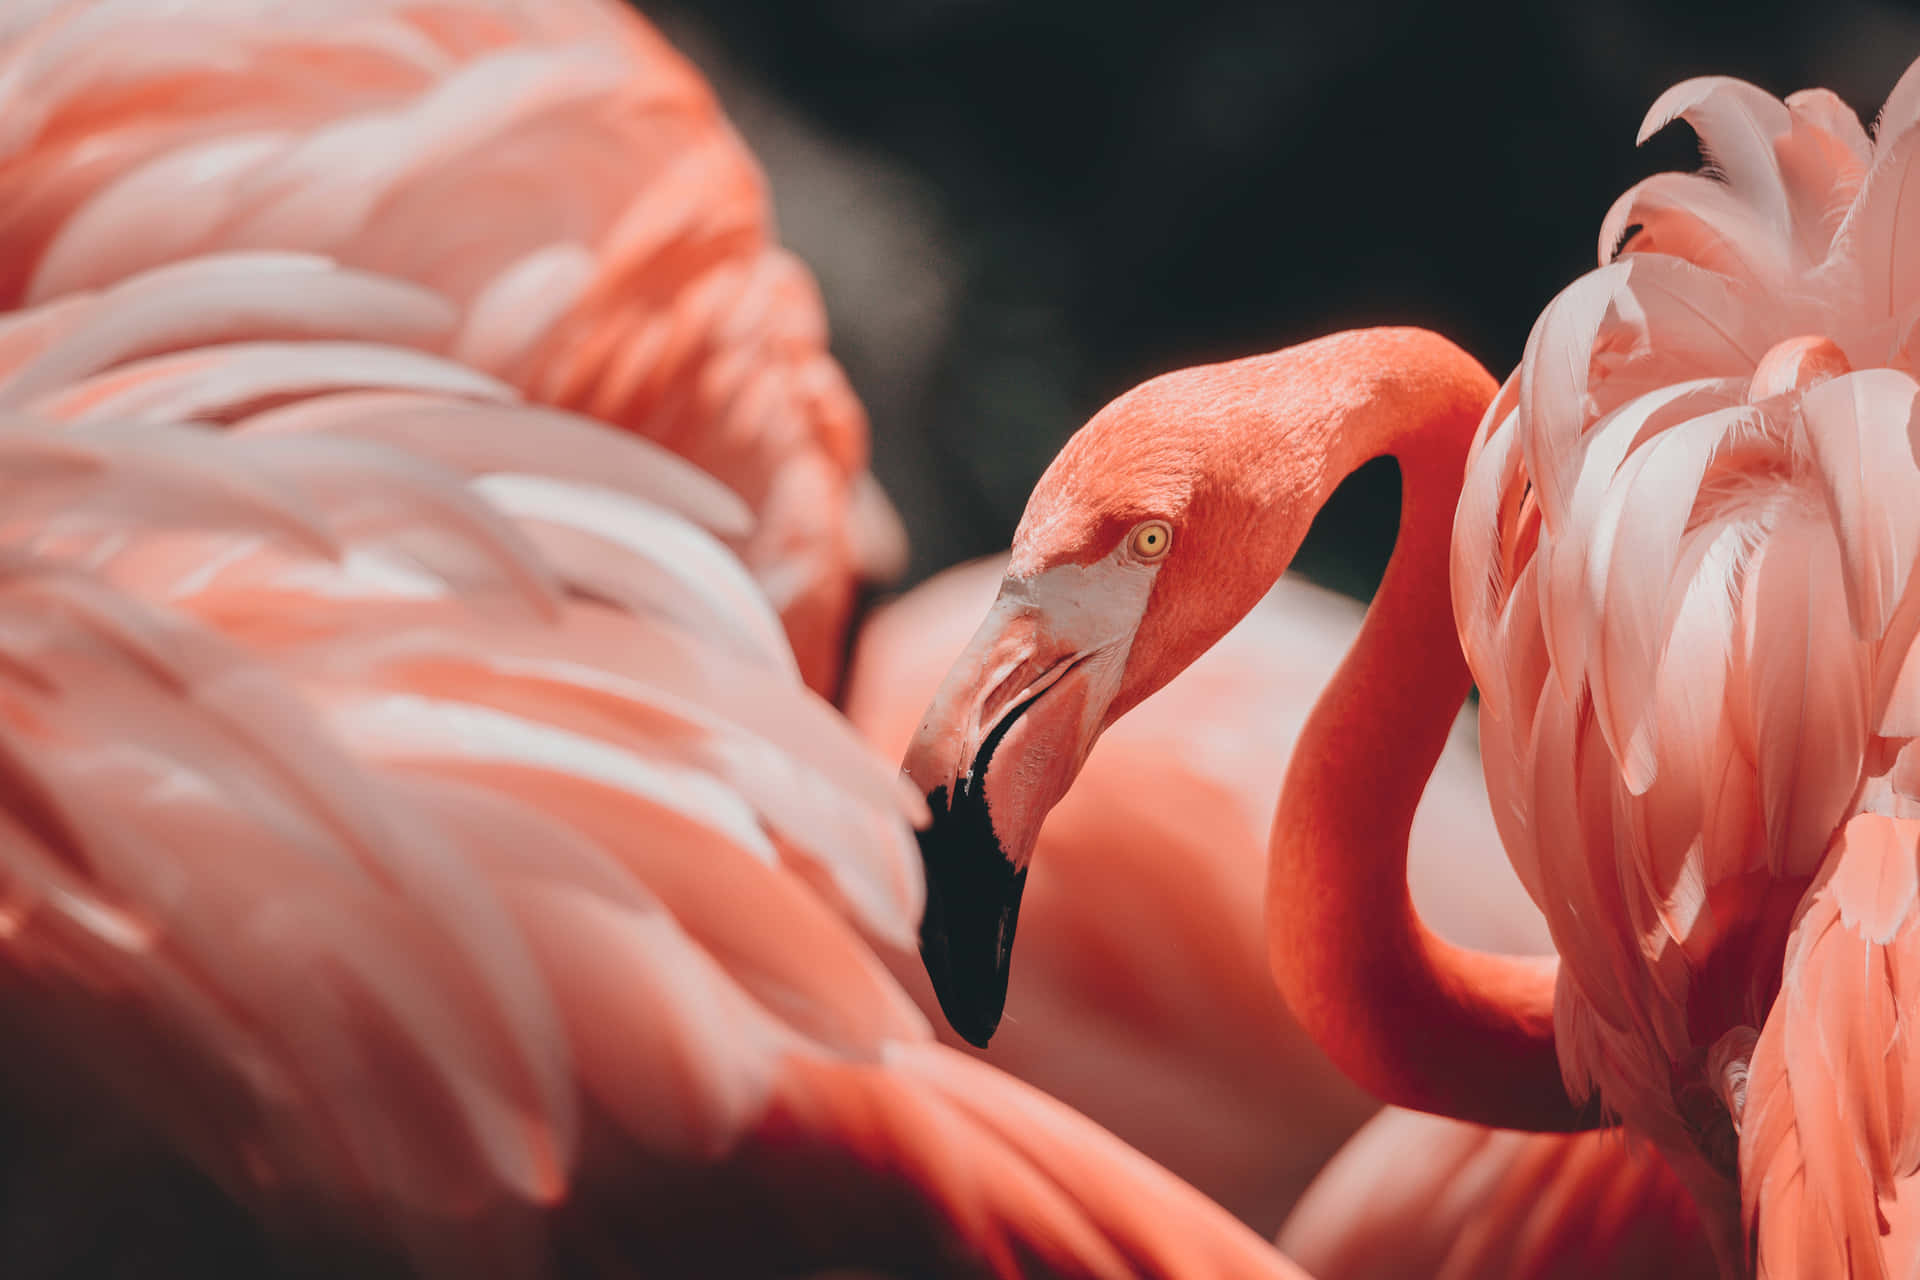 "The Fierce Beauty of the Flamingo"